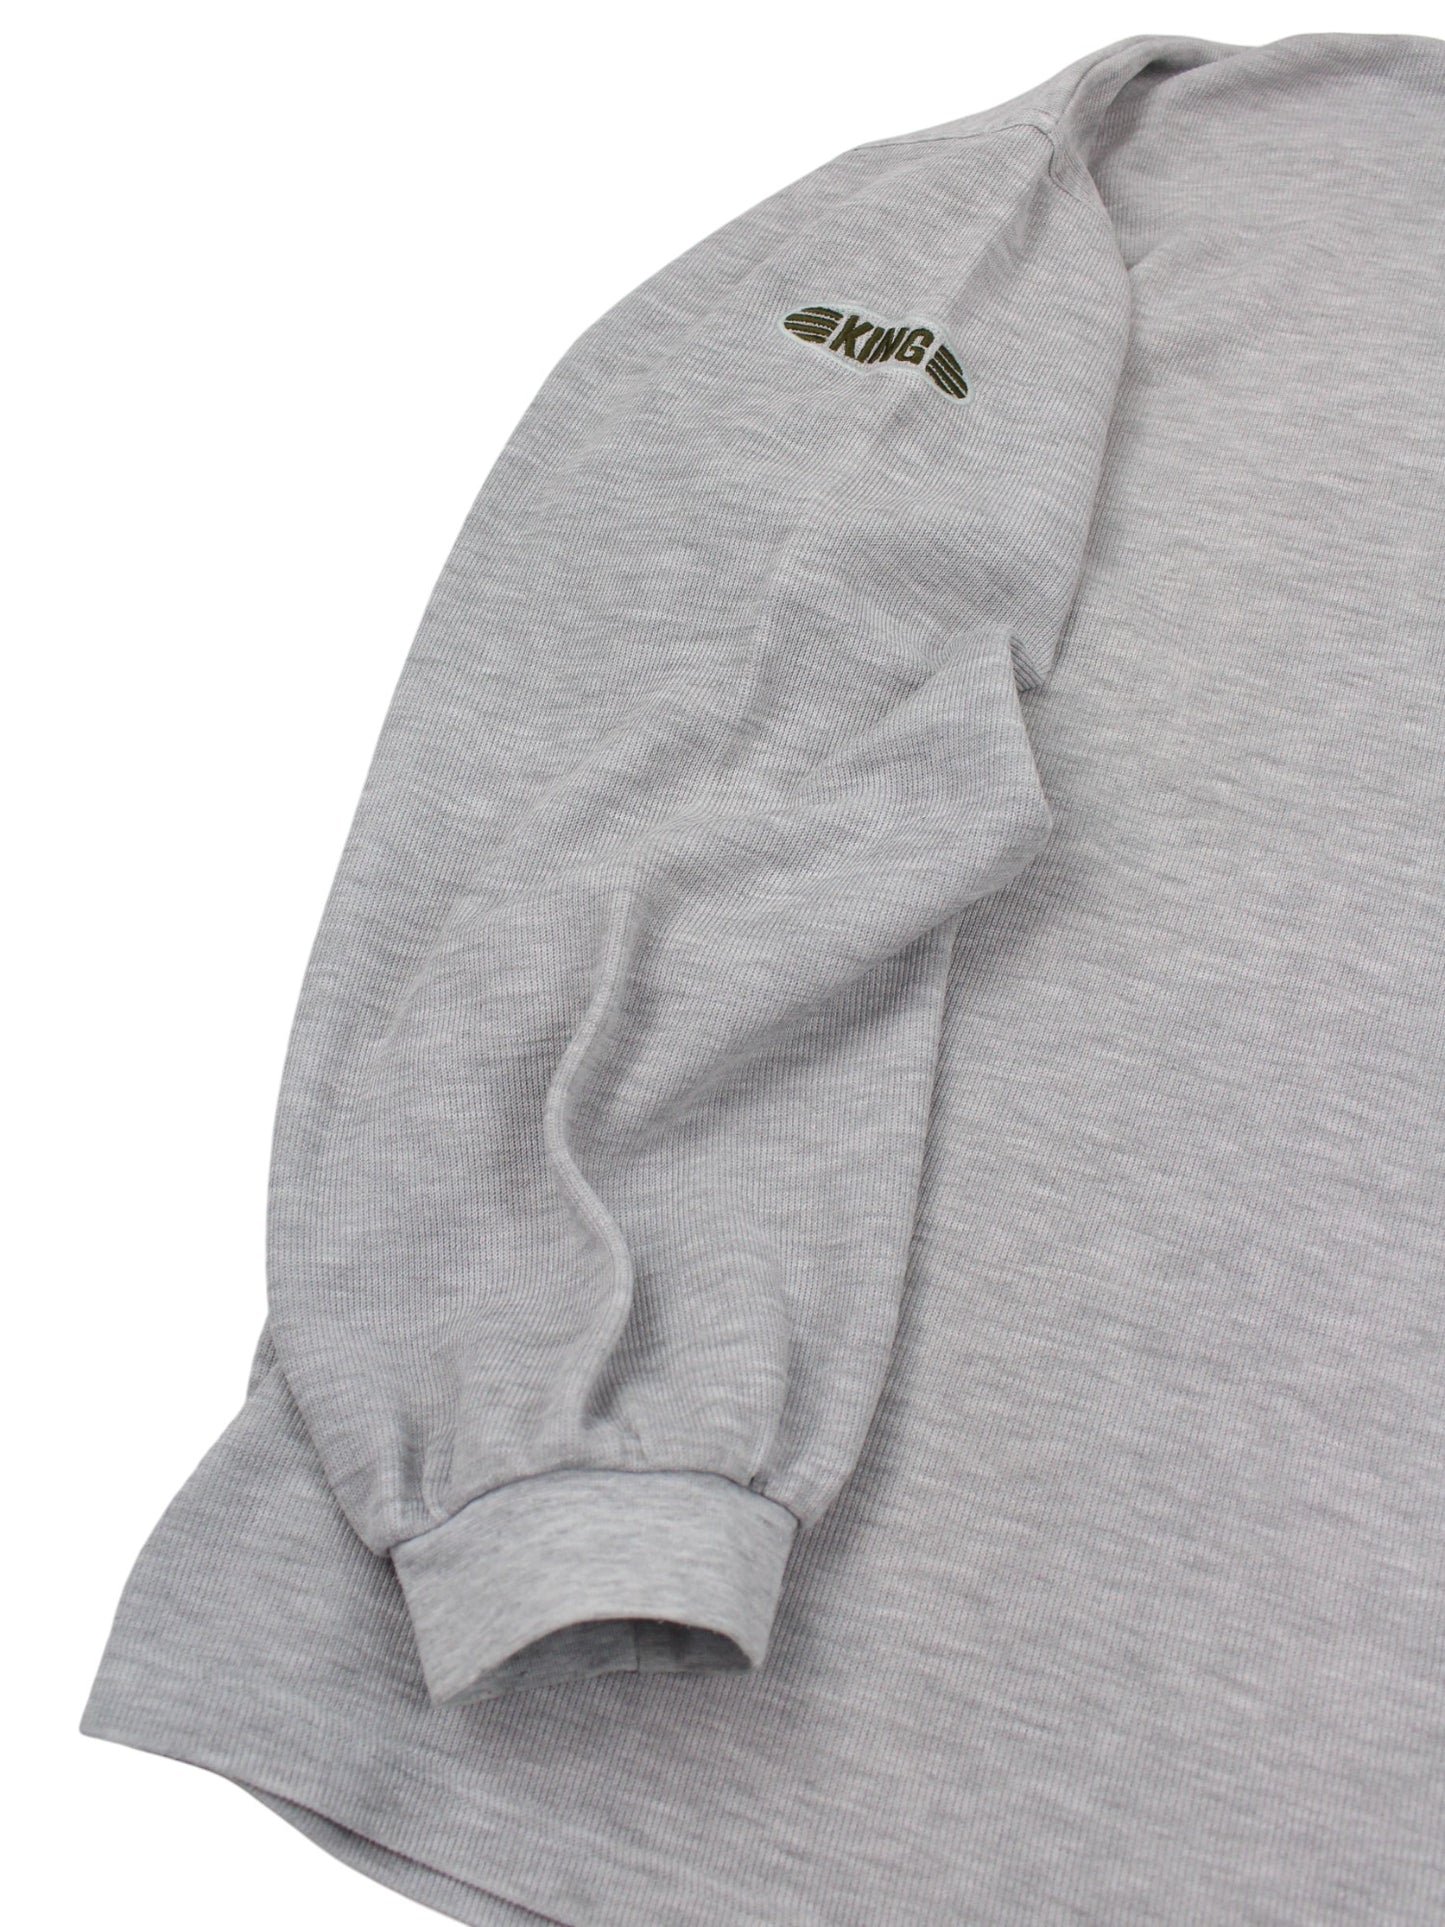 90s Puma King Grey Turtleneck Thin Sweatshirt (XL)